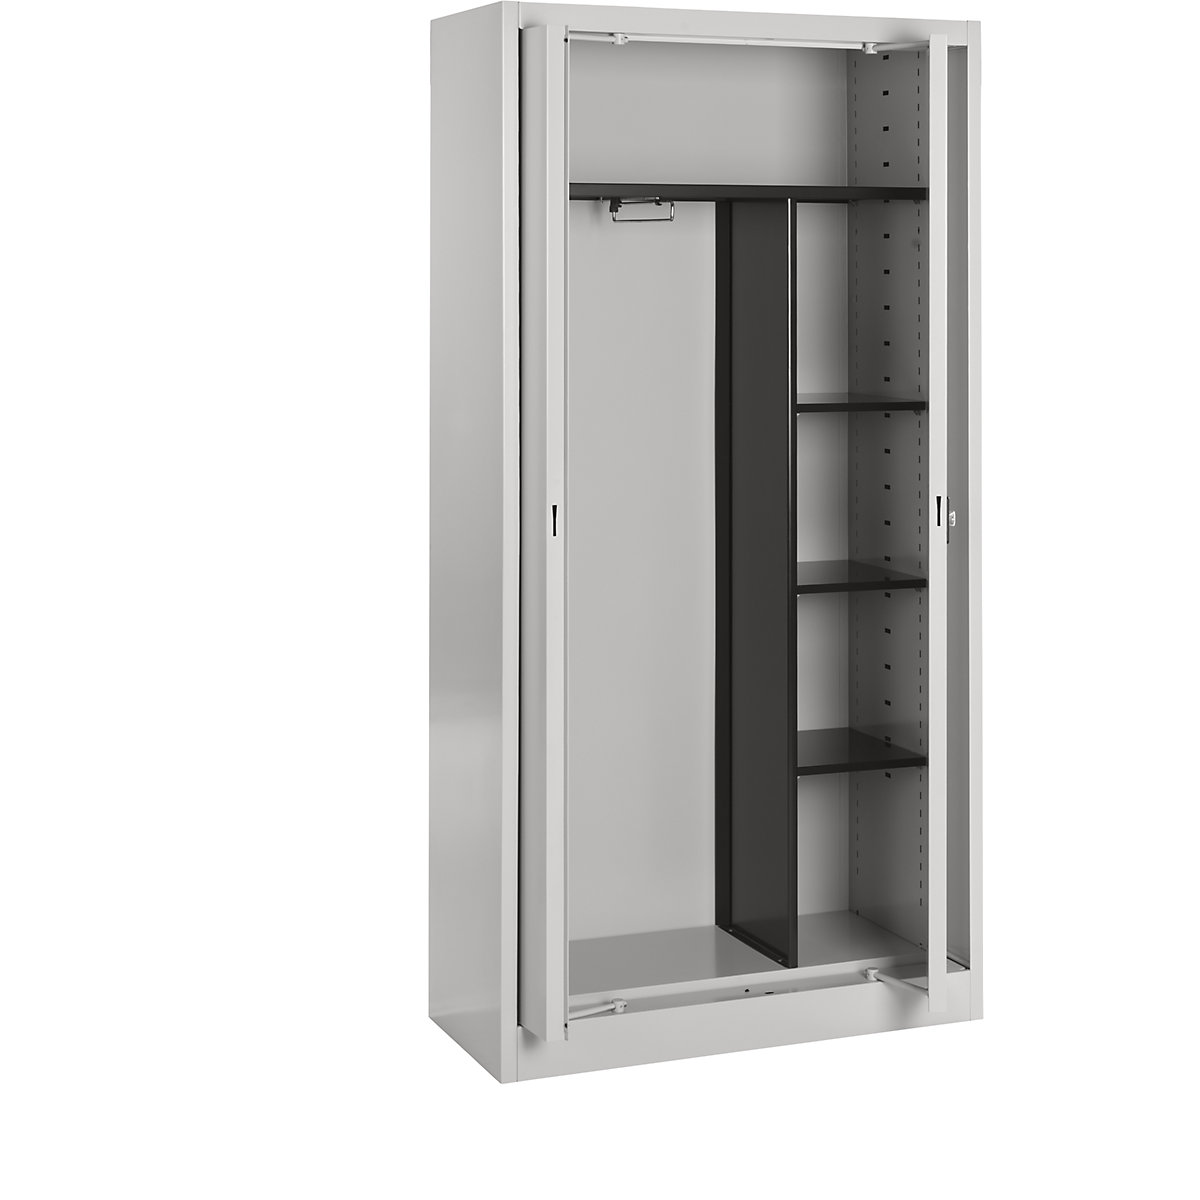 Steel cupboard with flush doors - mauser